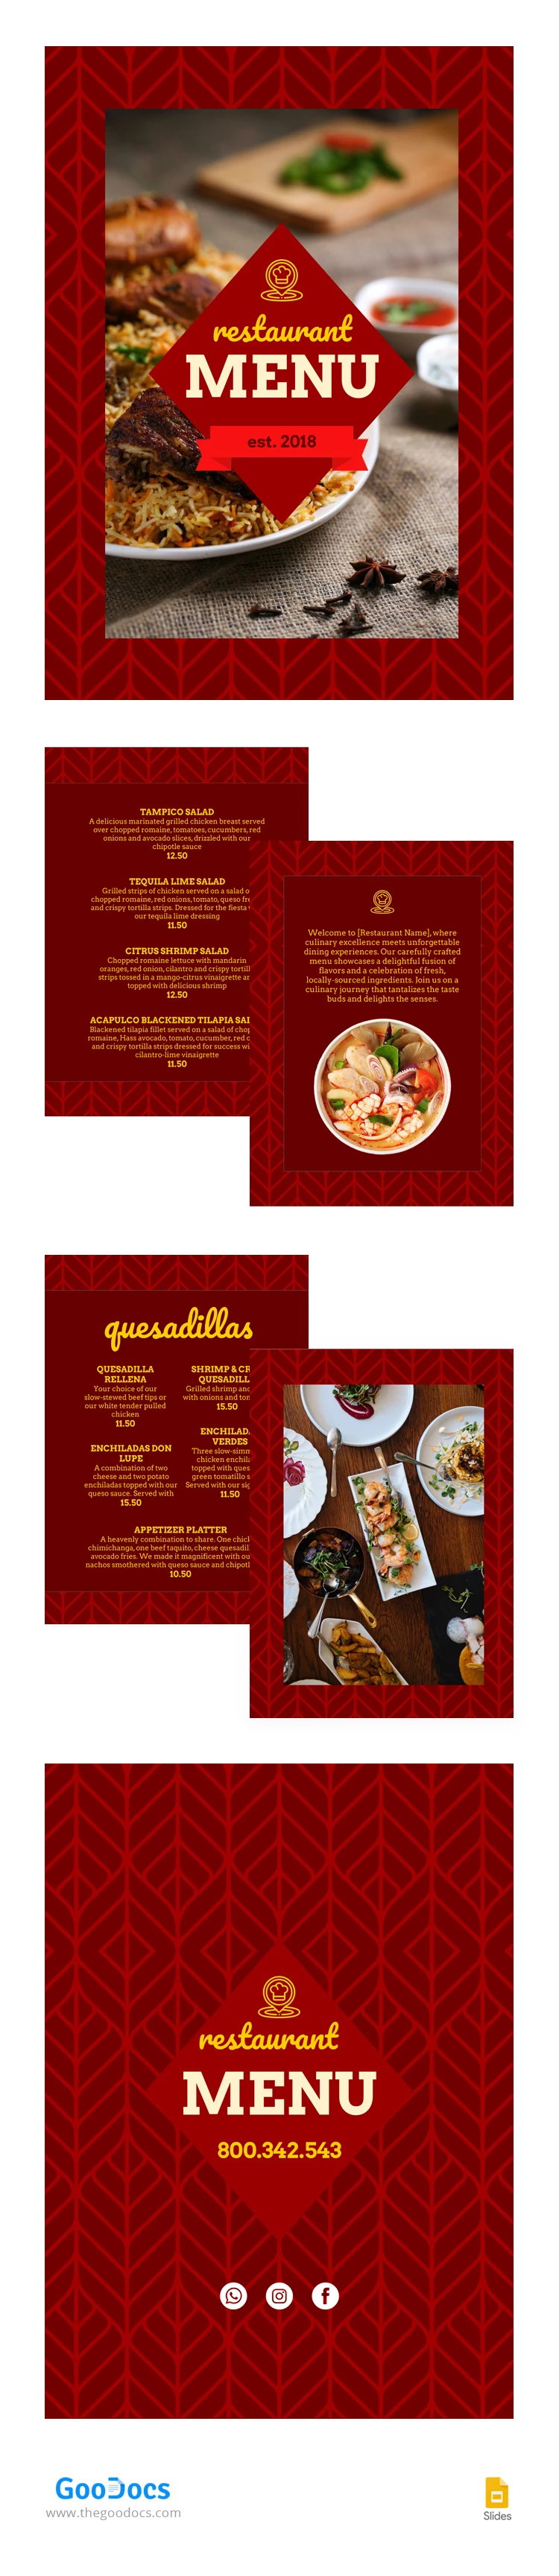 Café-Menü Restaurant - free Google Docs Template - 10066606